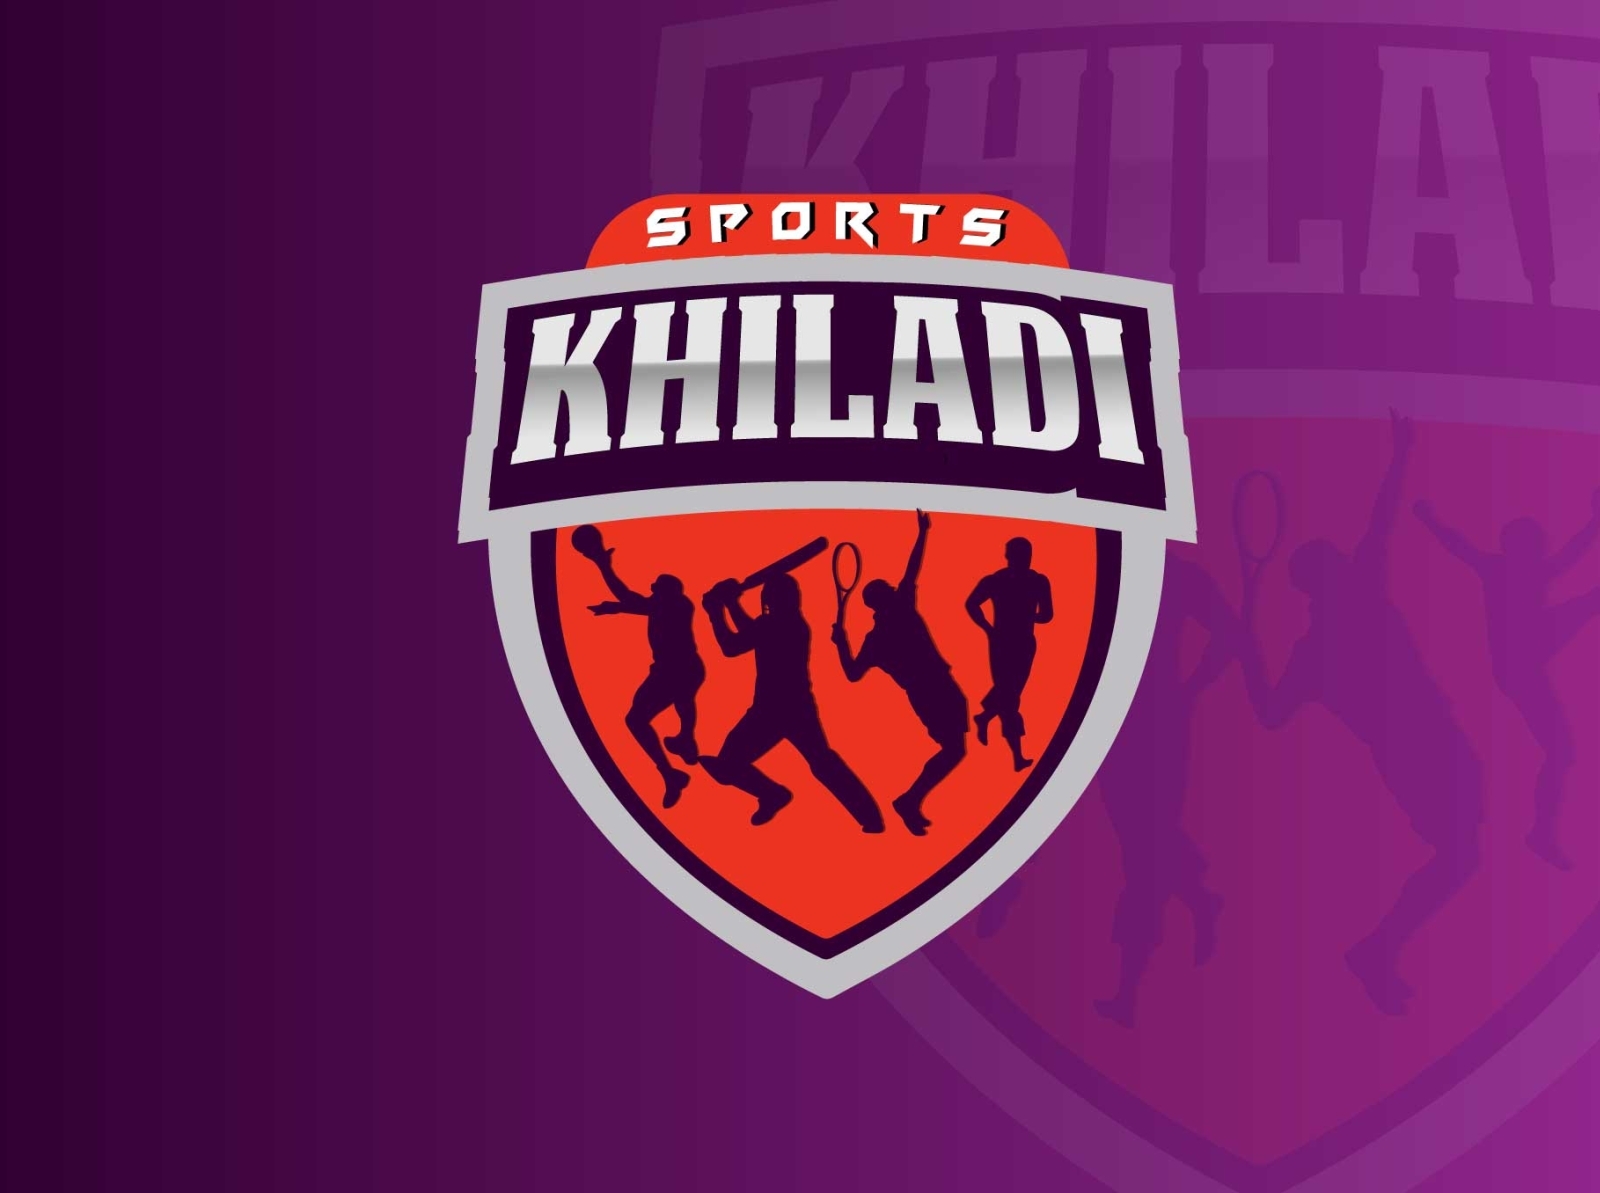 Sport khiladi logo by Preet kamal on Dribbble